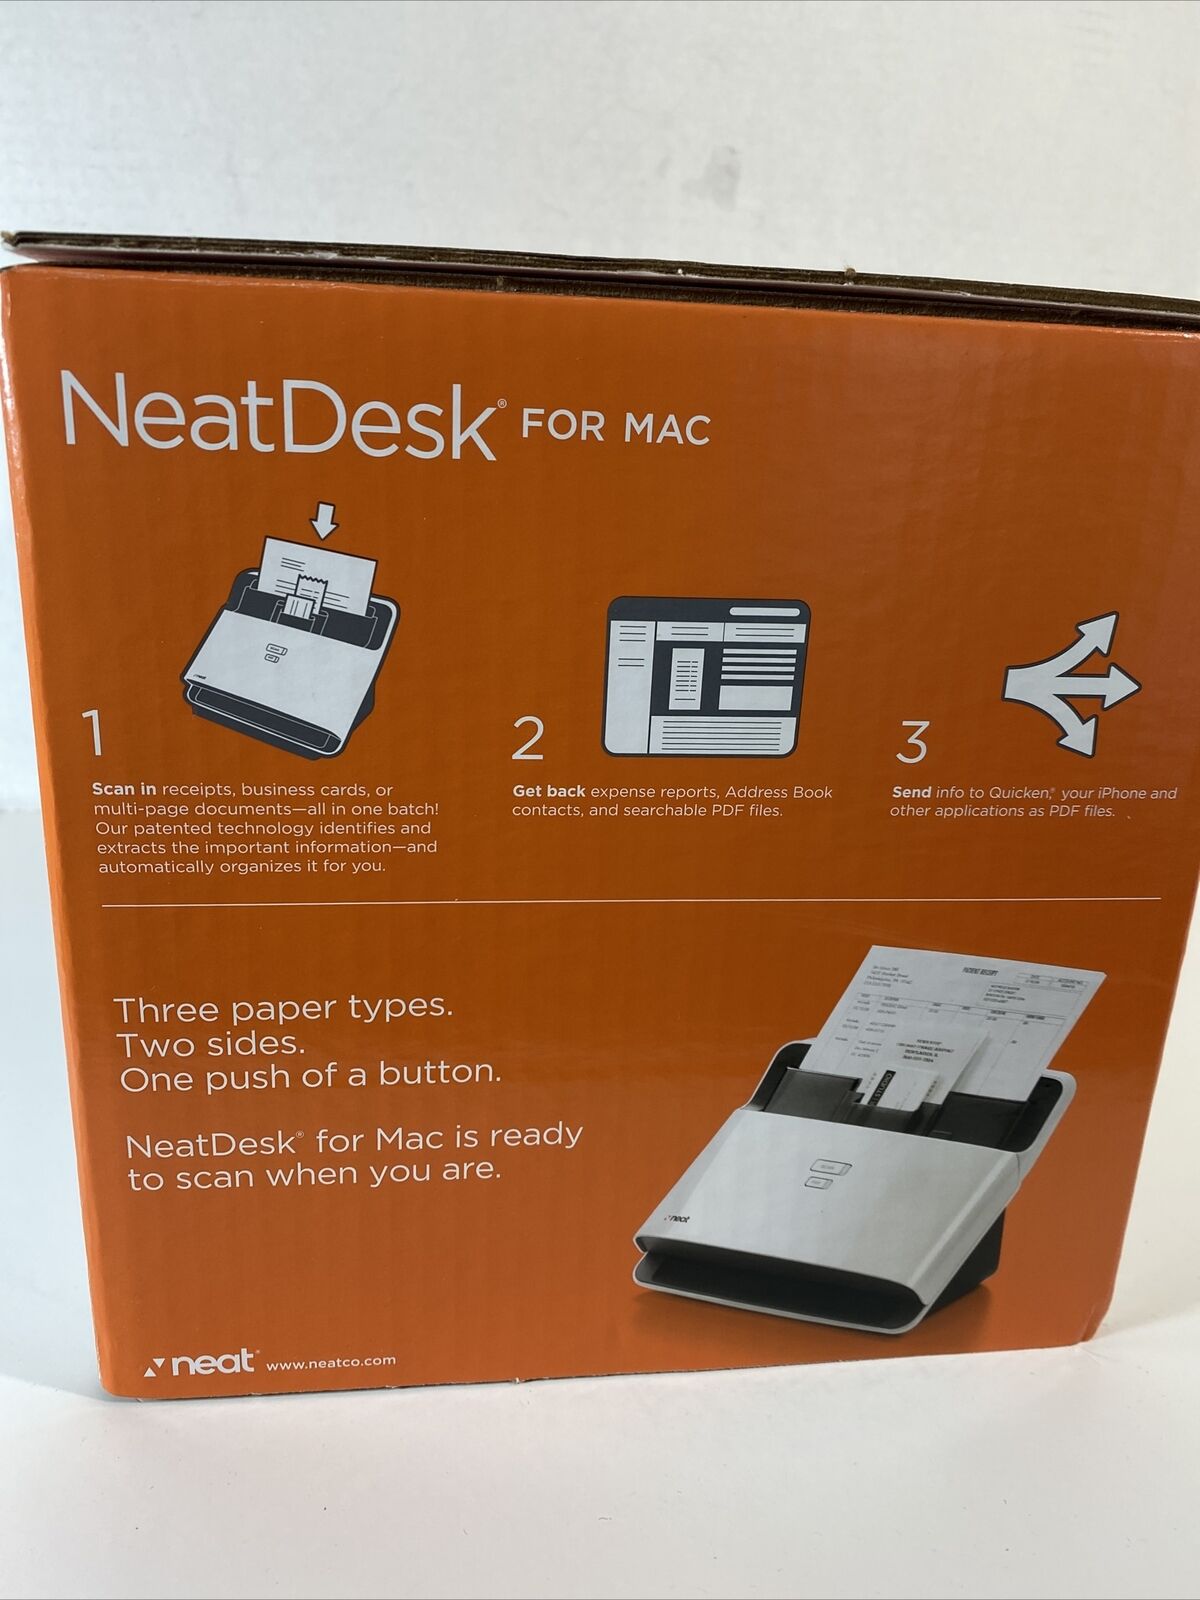 neatdesk for mac review 2012